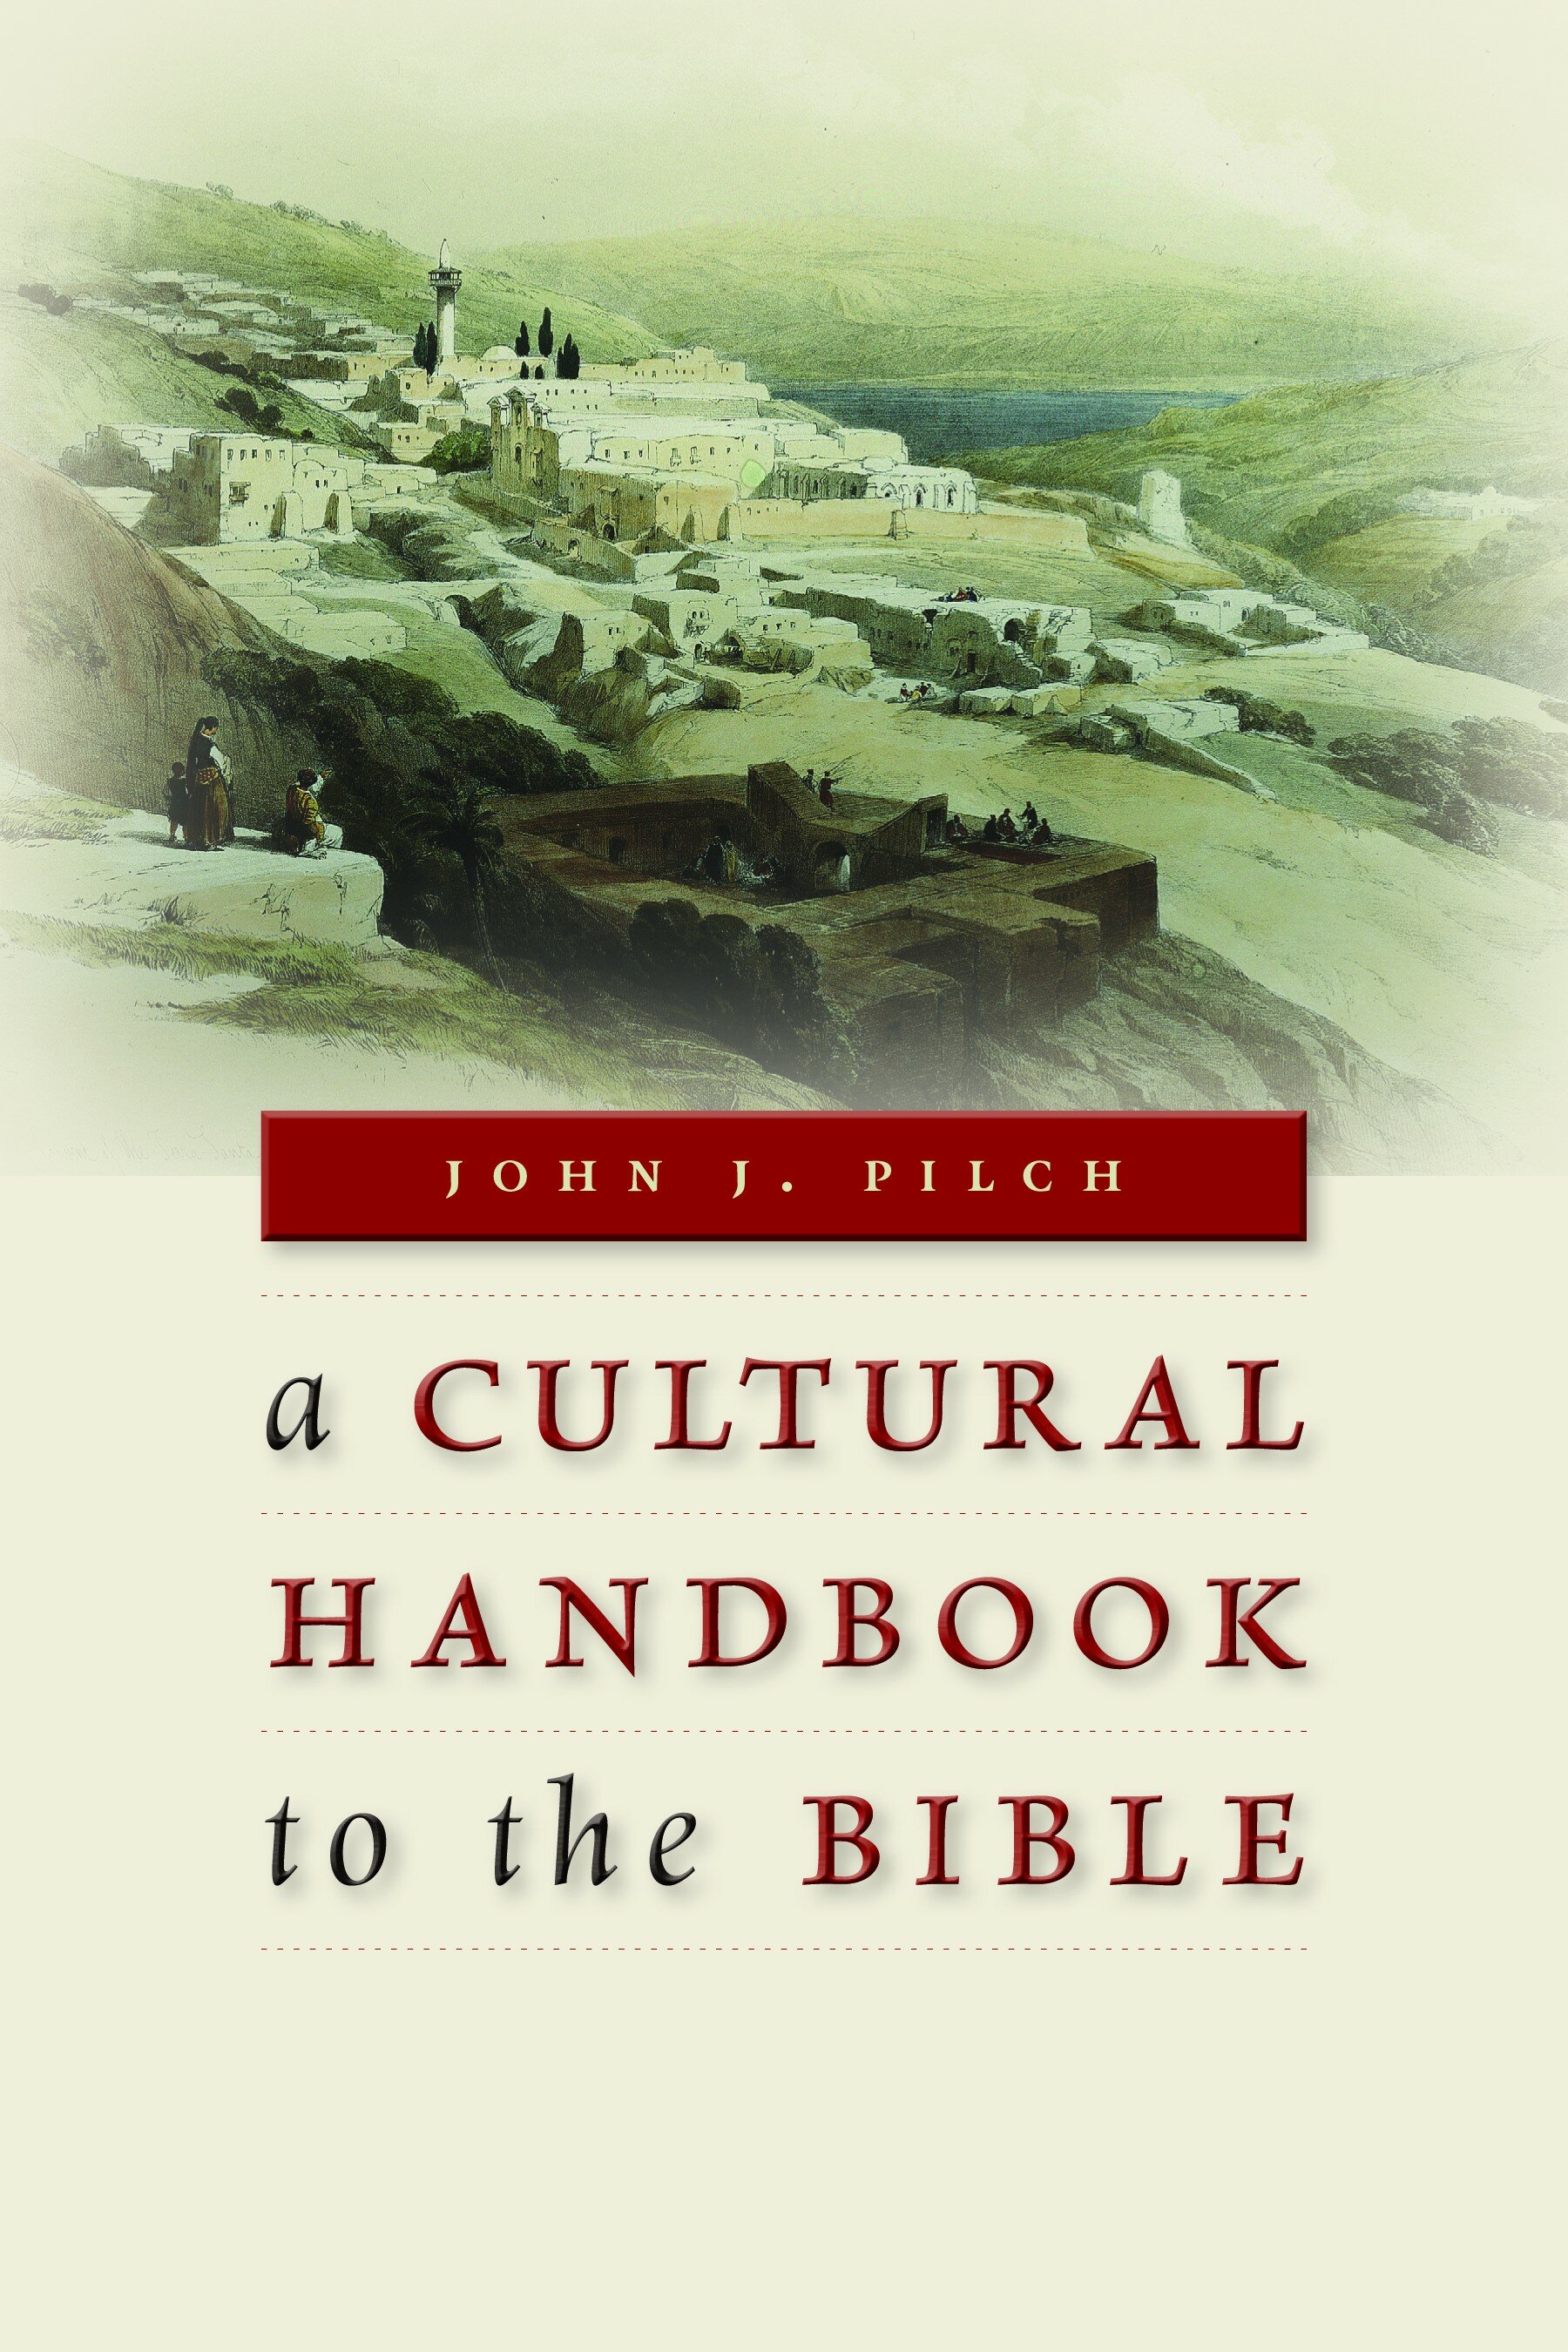 A Cultural Handbook to the Bible